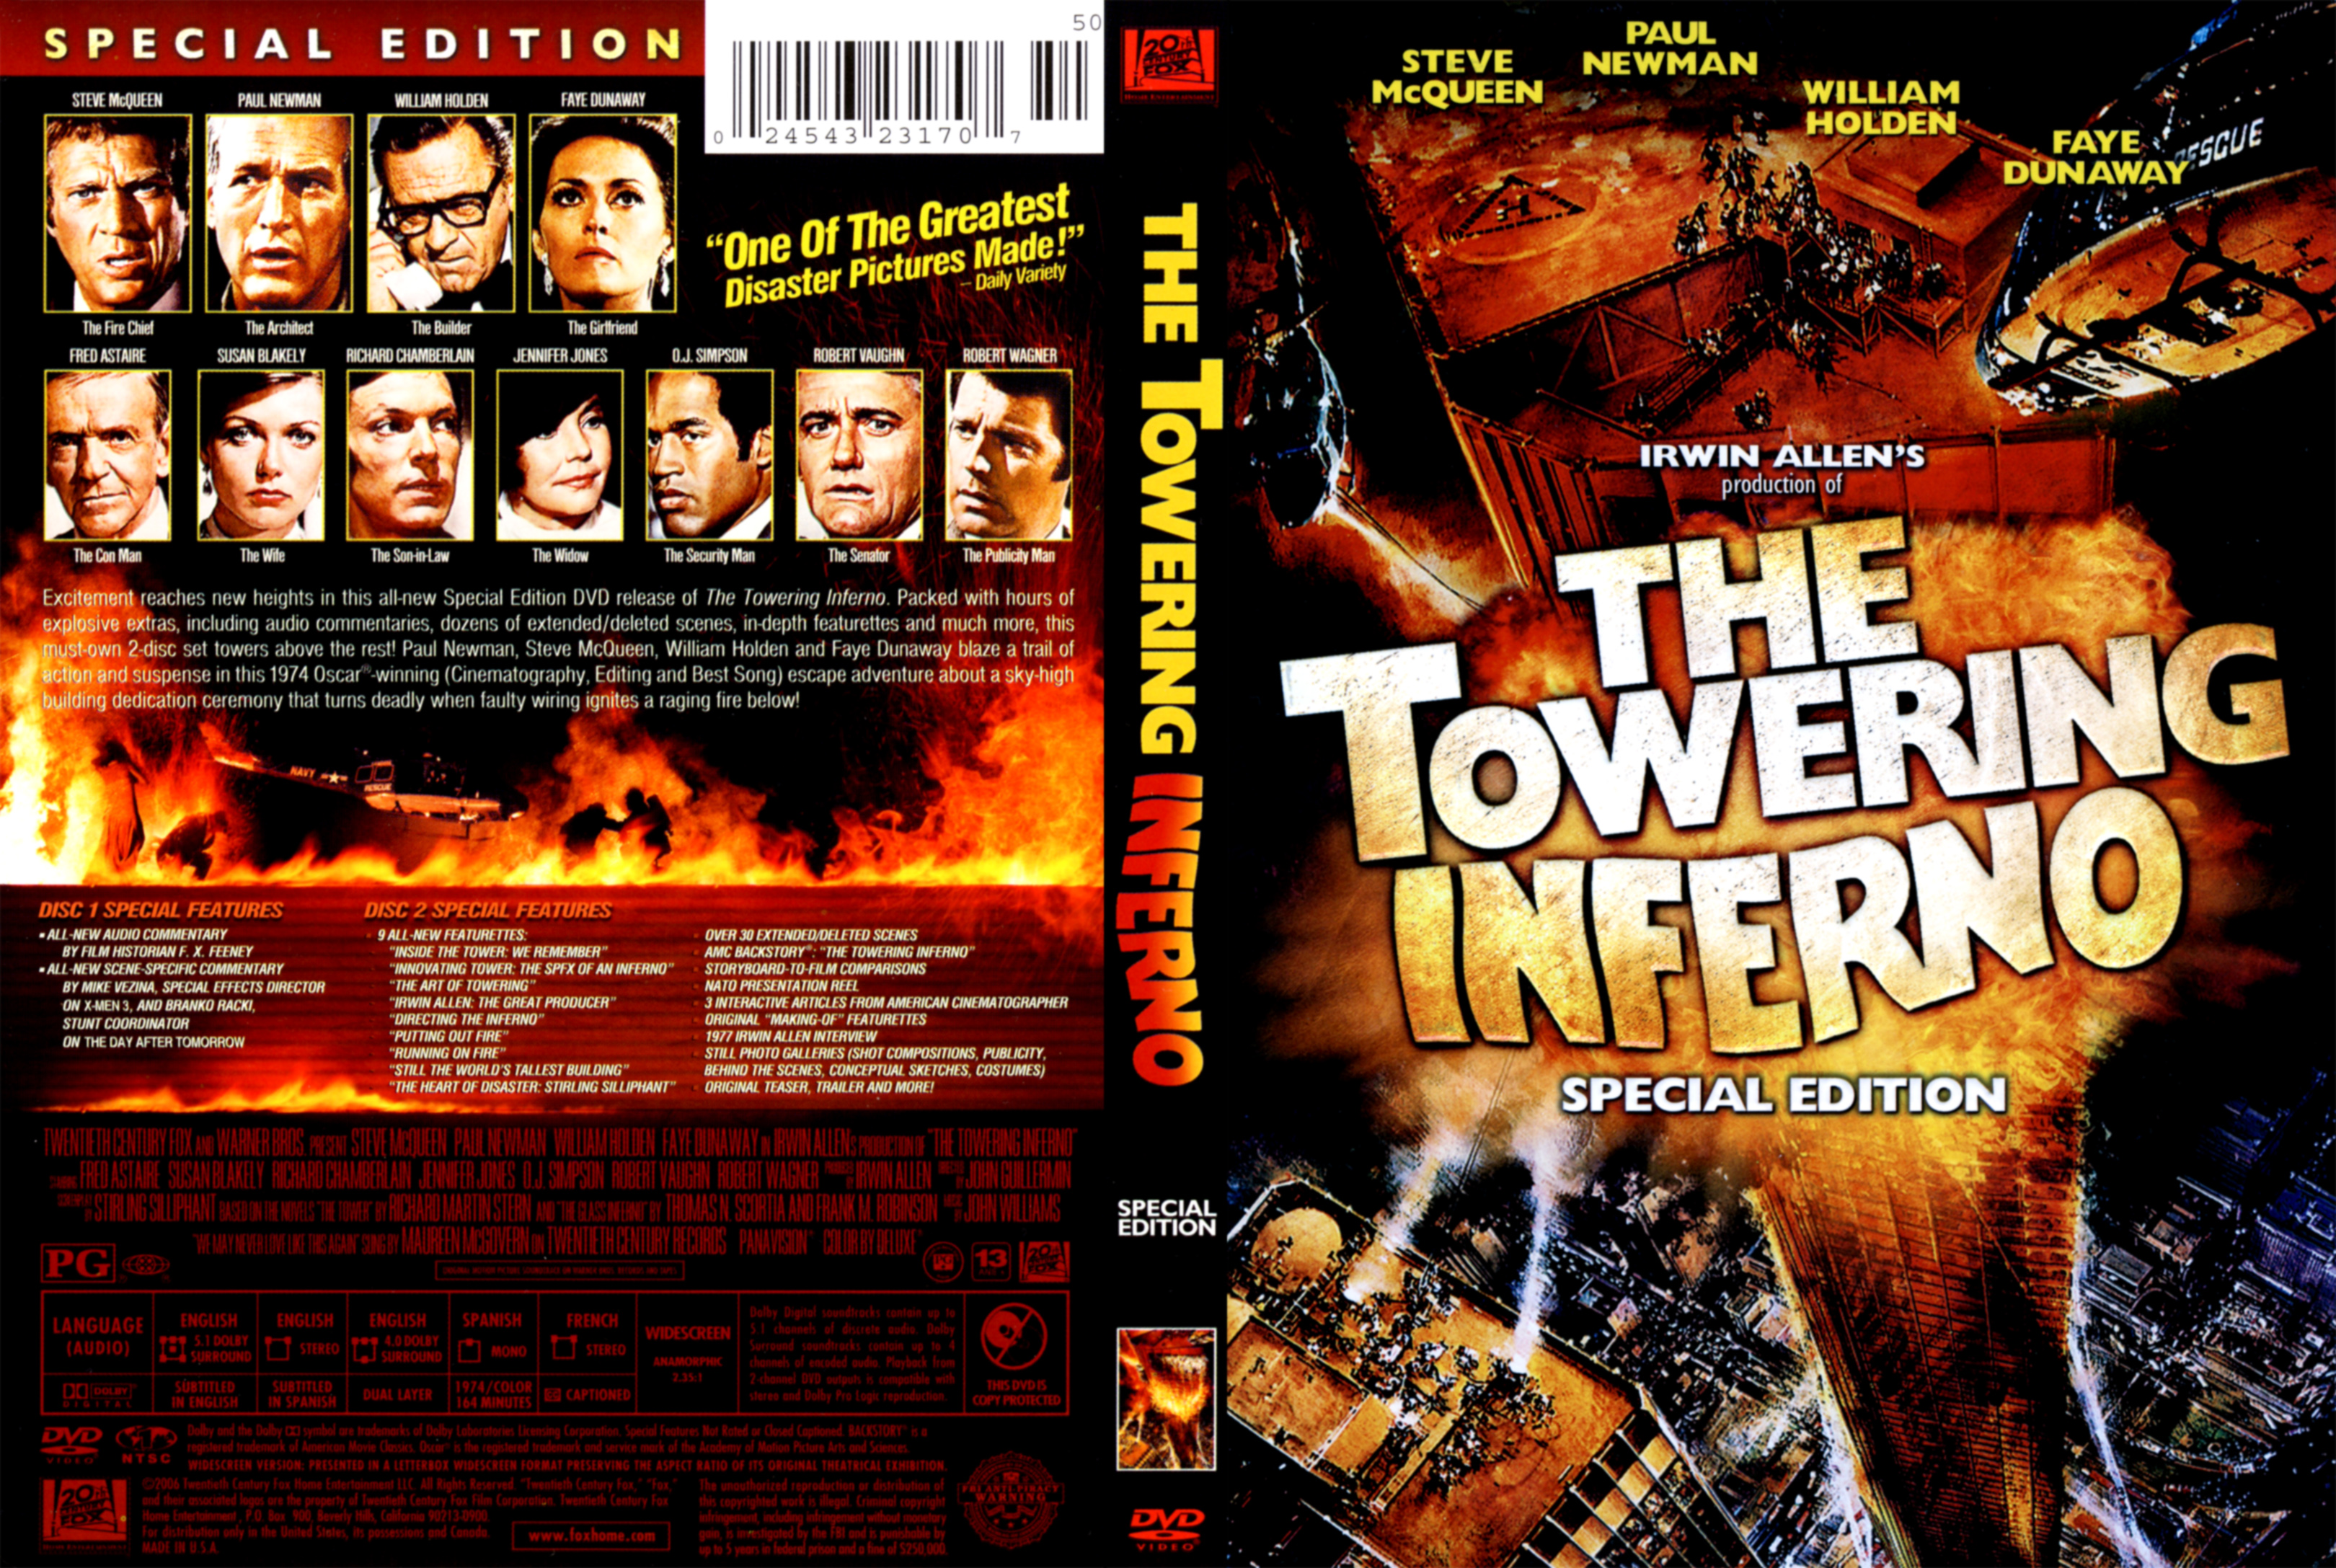 Stiahni si HD Filmy Sklenene peklo / The Towering Inferno (1974)(CZ/EN) = CSFD 85%